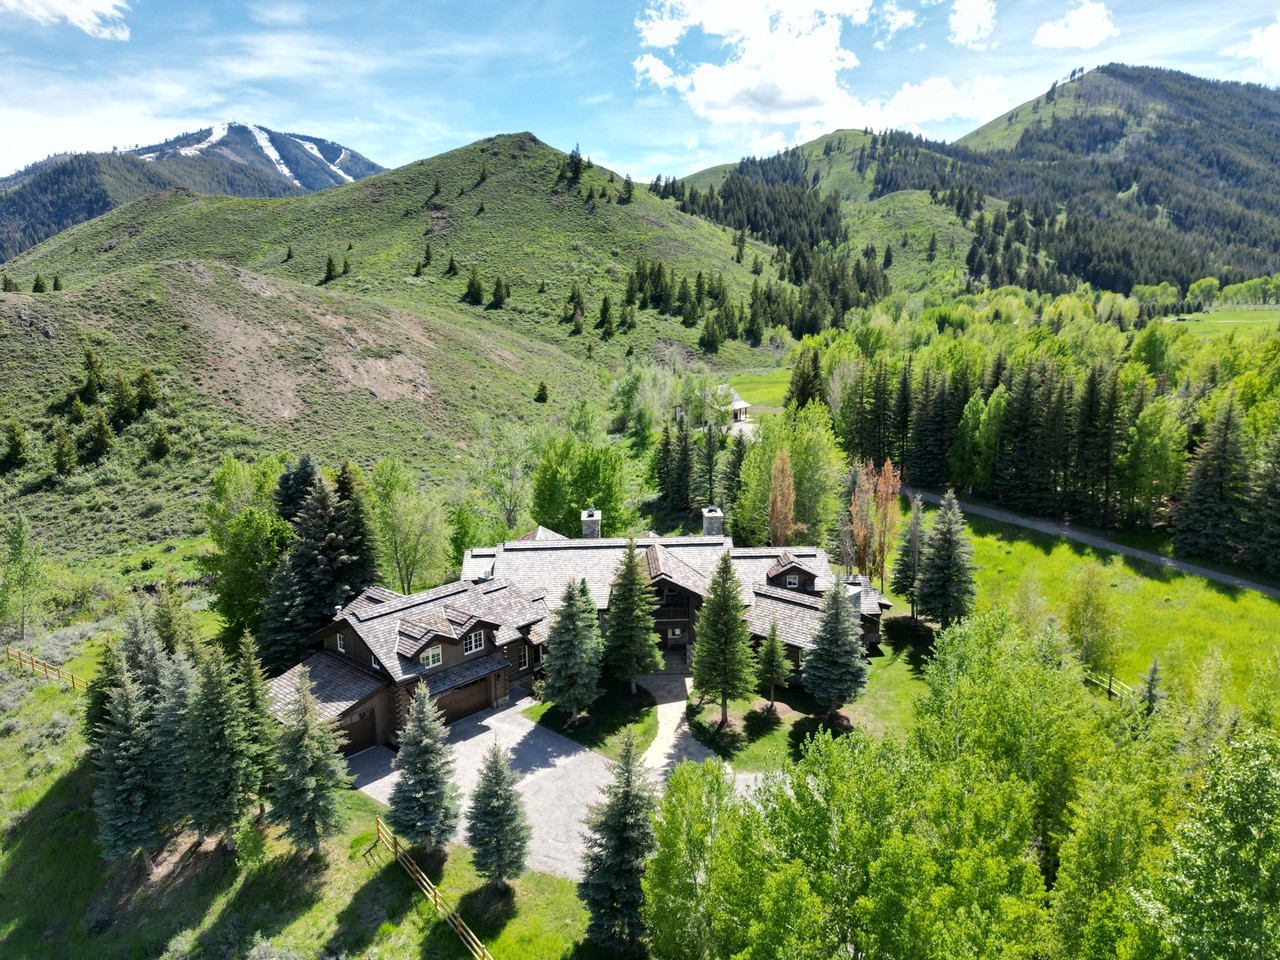 Classic Mountain Lodge in Ketchum, Idaho